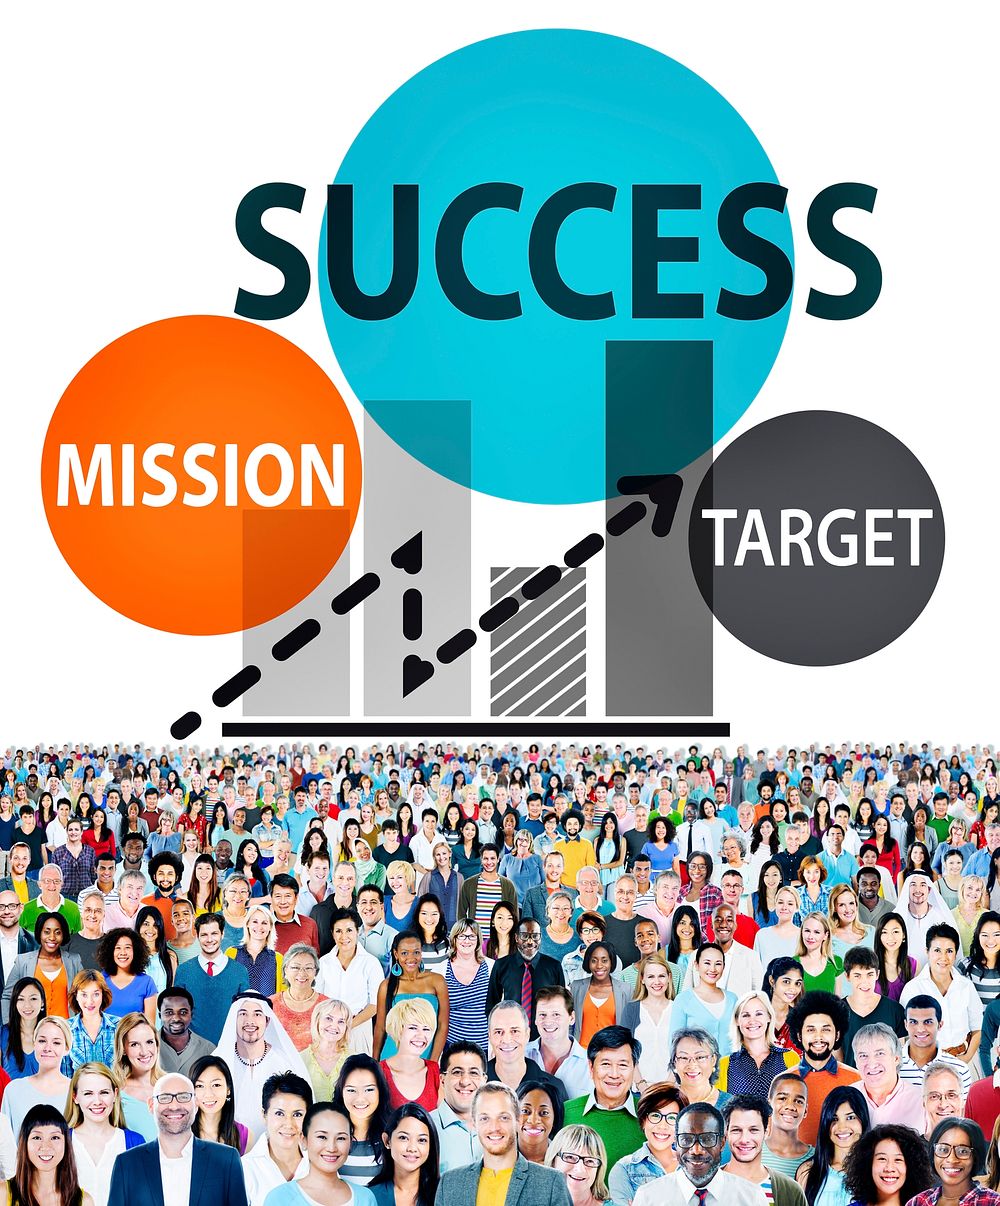 Success Mission Tarket Buisness Growth Planning Concept